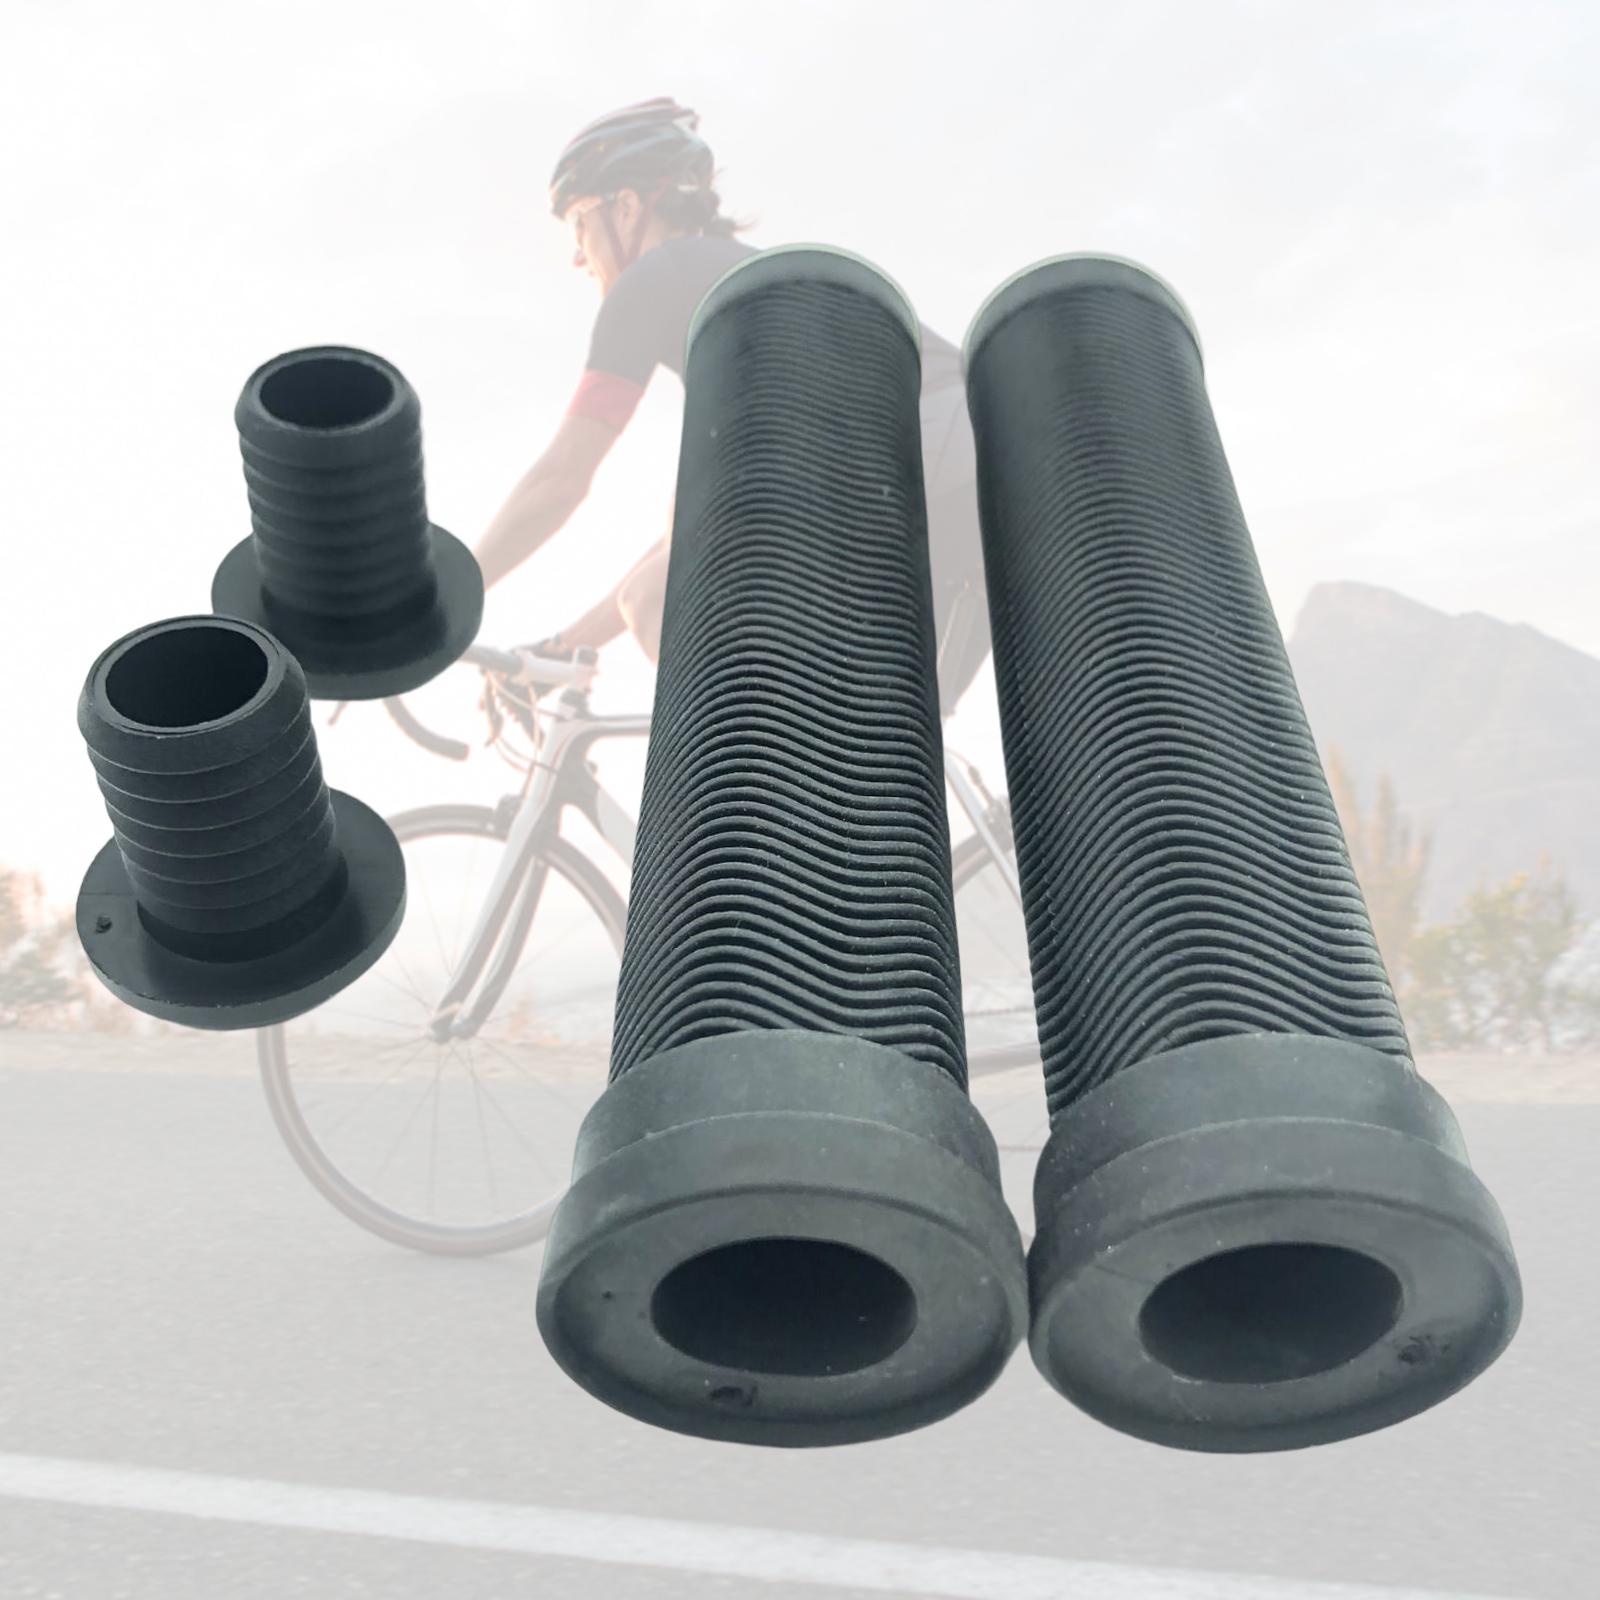 2x Soft Handlebar Grips Sleeve Anti-Skid Comfortable for BMX Sports Cycling Black